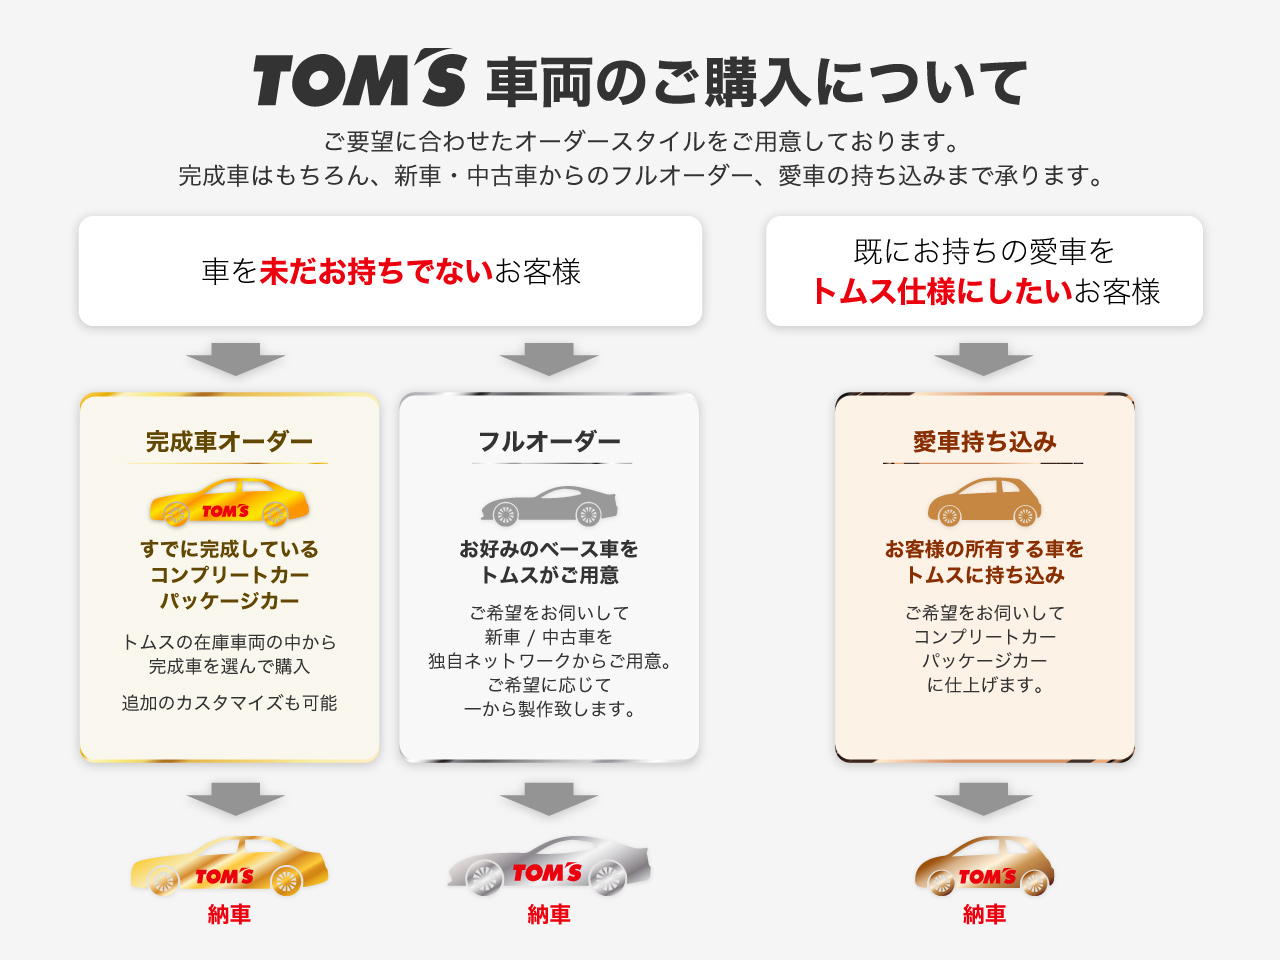 TOM’S IS